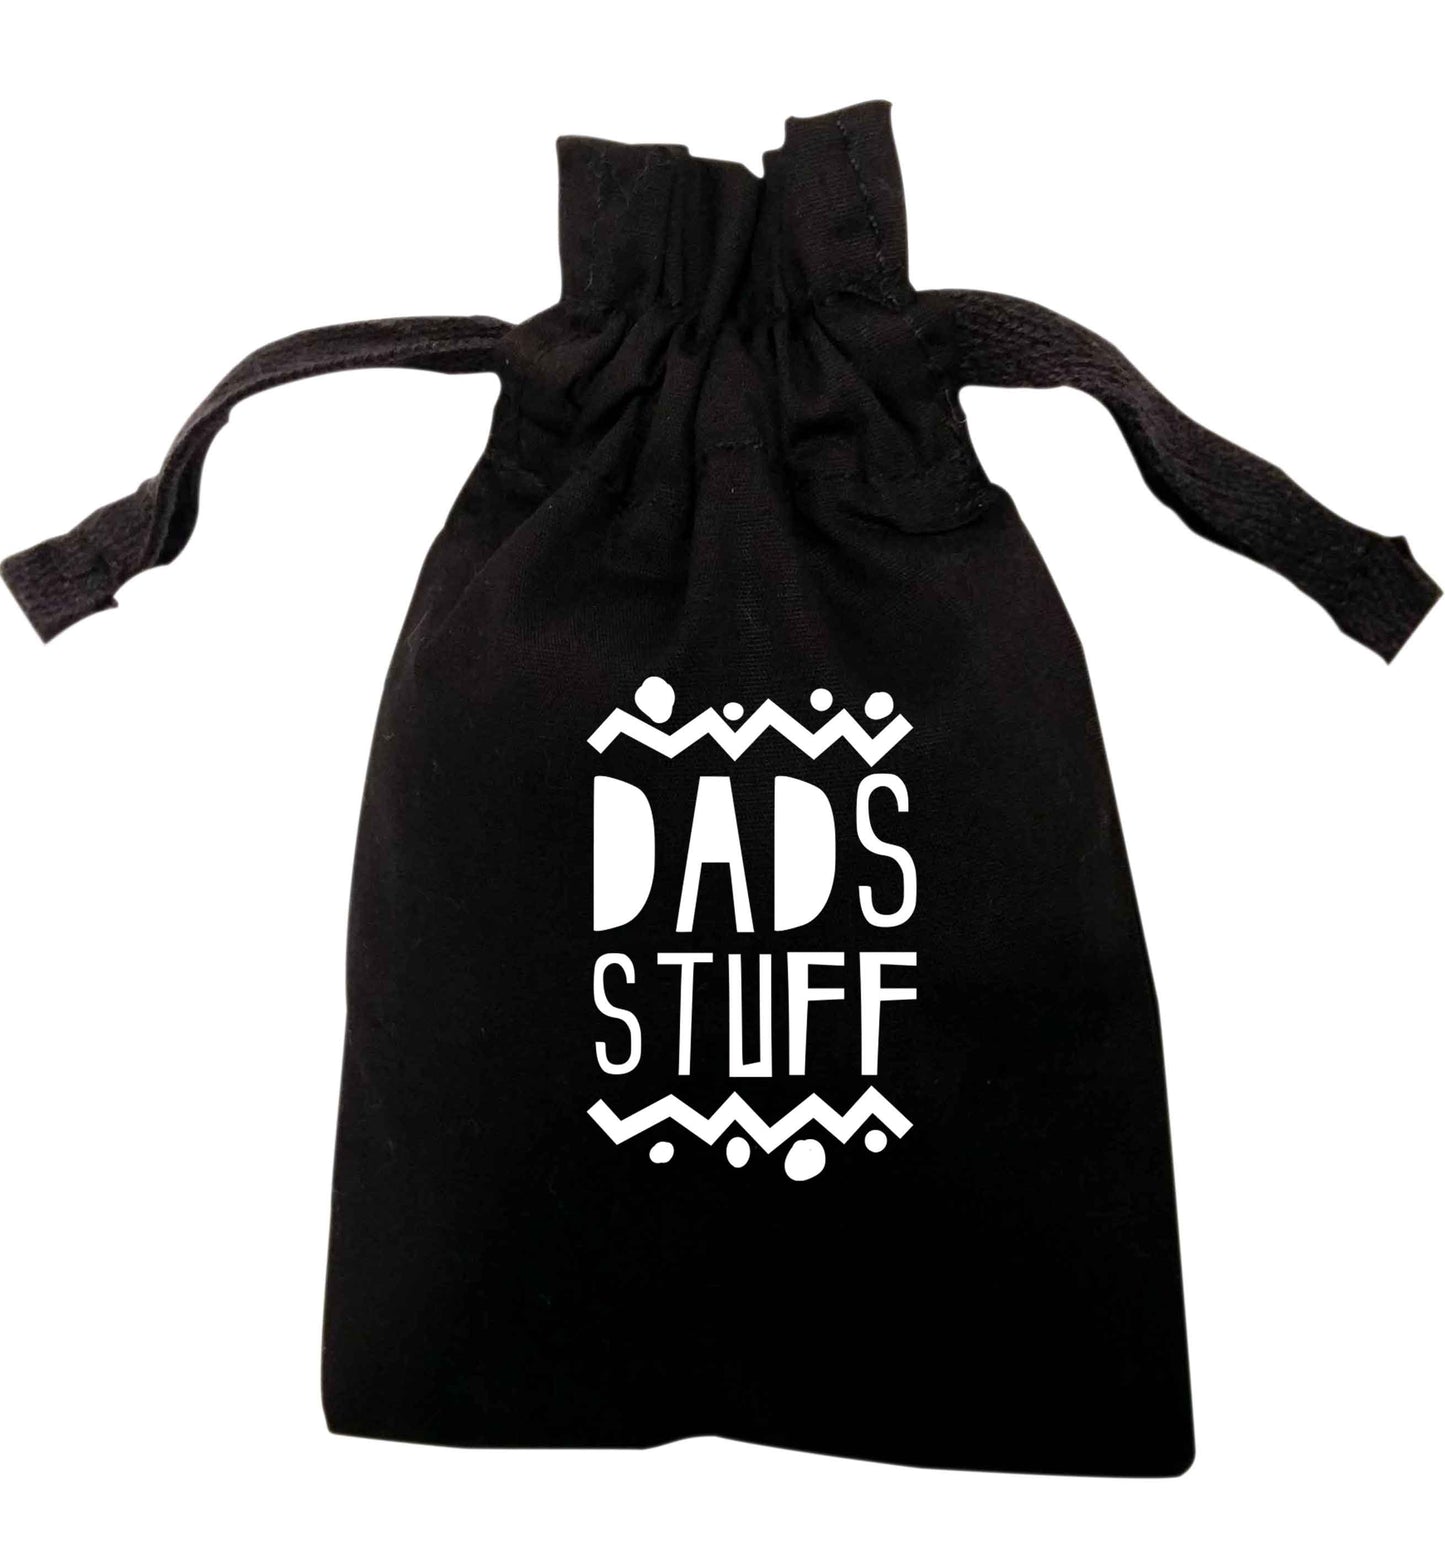 Dads stuff | XS - L | Pouch / Drawstring bag / Sack | Organic Cotton | Bulk discounts available!